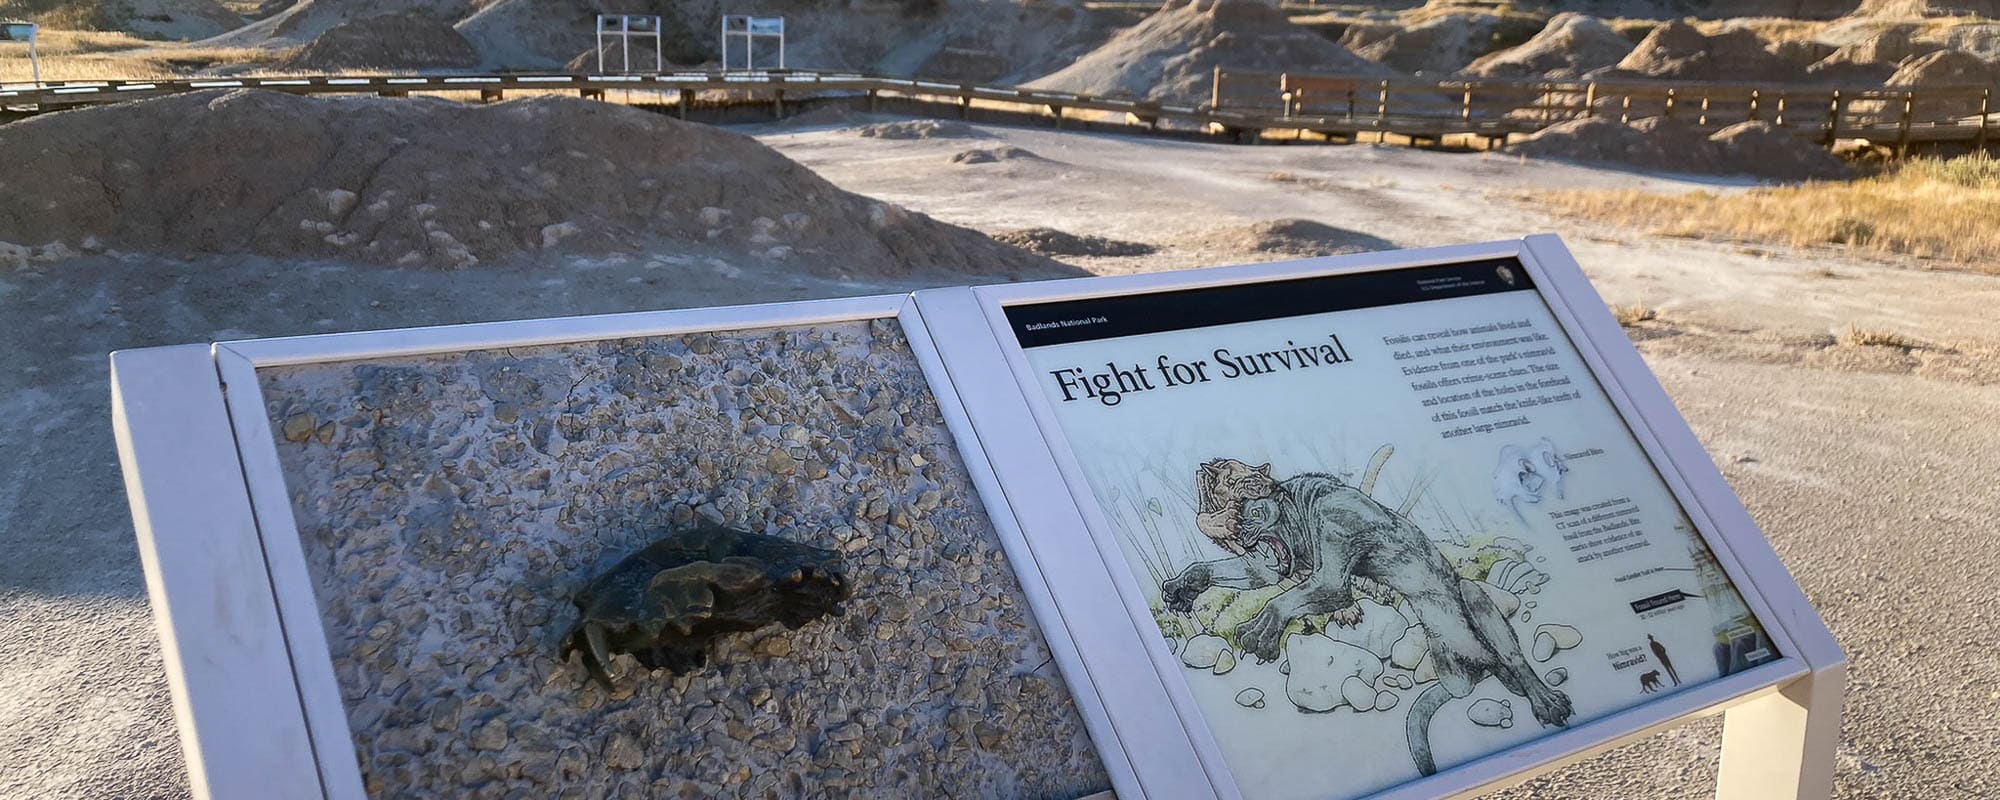 Fossil Exhibit Trail information panel in Badlands National Park, South Dakota